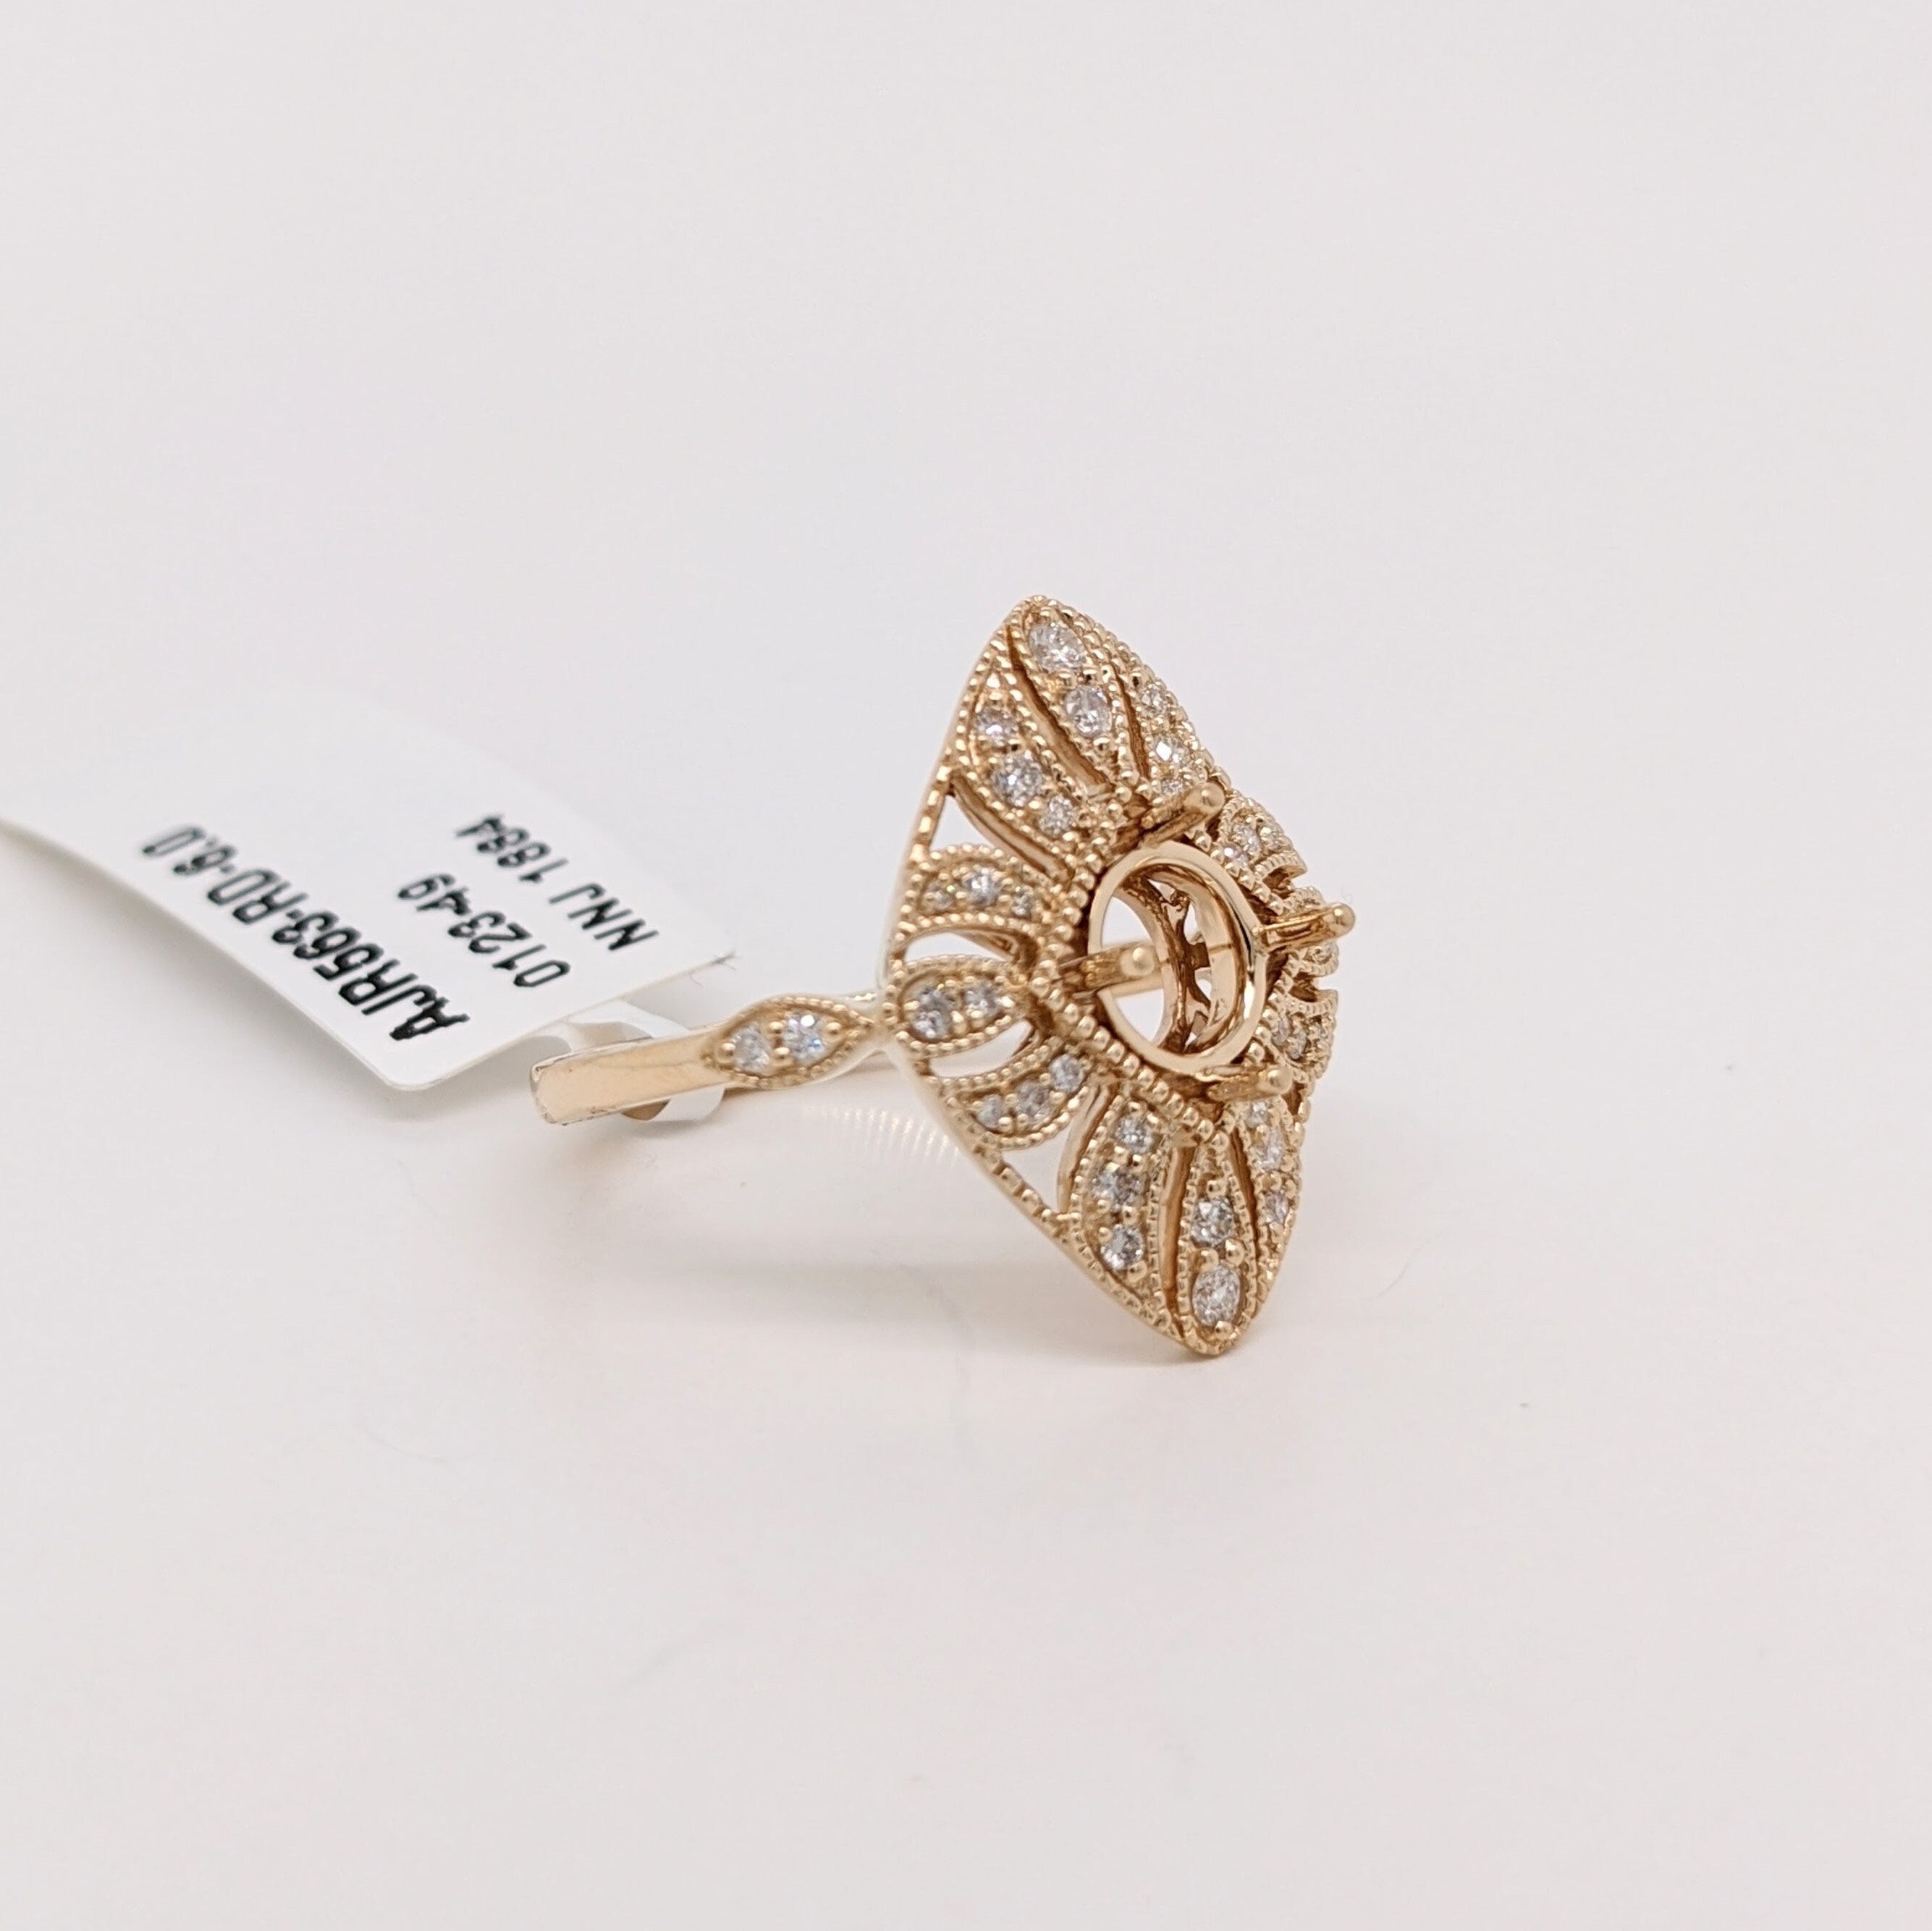 Vintage Inspired Ring Semi Mount w Diamonds in Solid 14K Gold | Round 6mm Brilliant Cut | Milgrain | Custom Gemstone Jewelry | Stone Setting